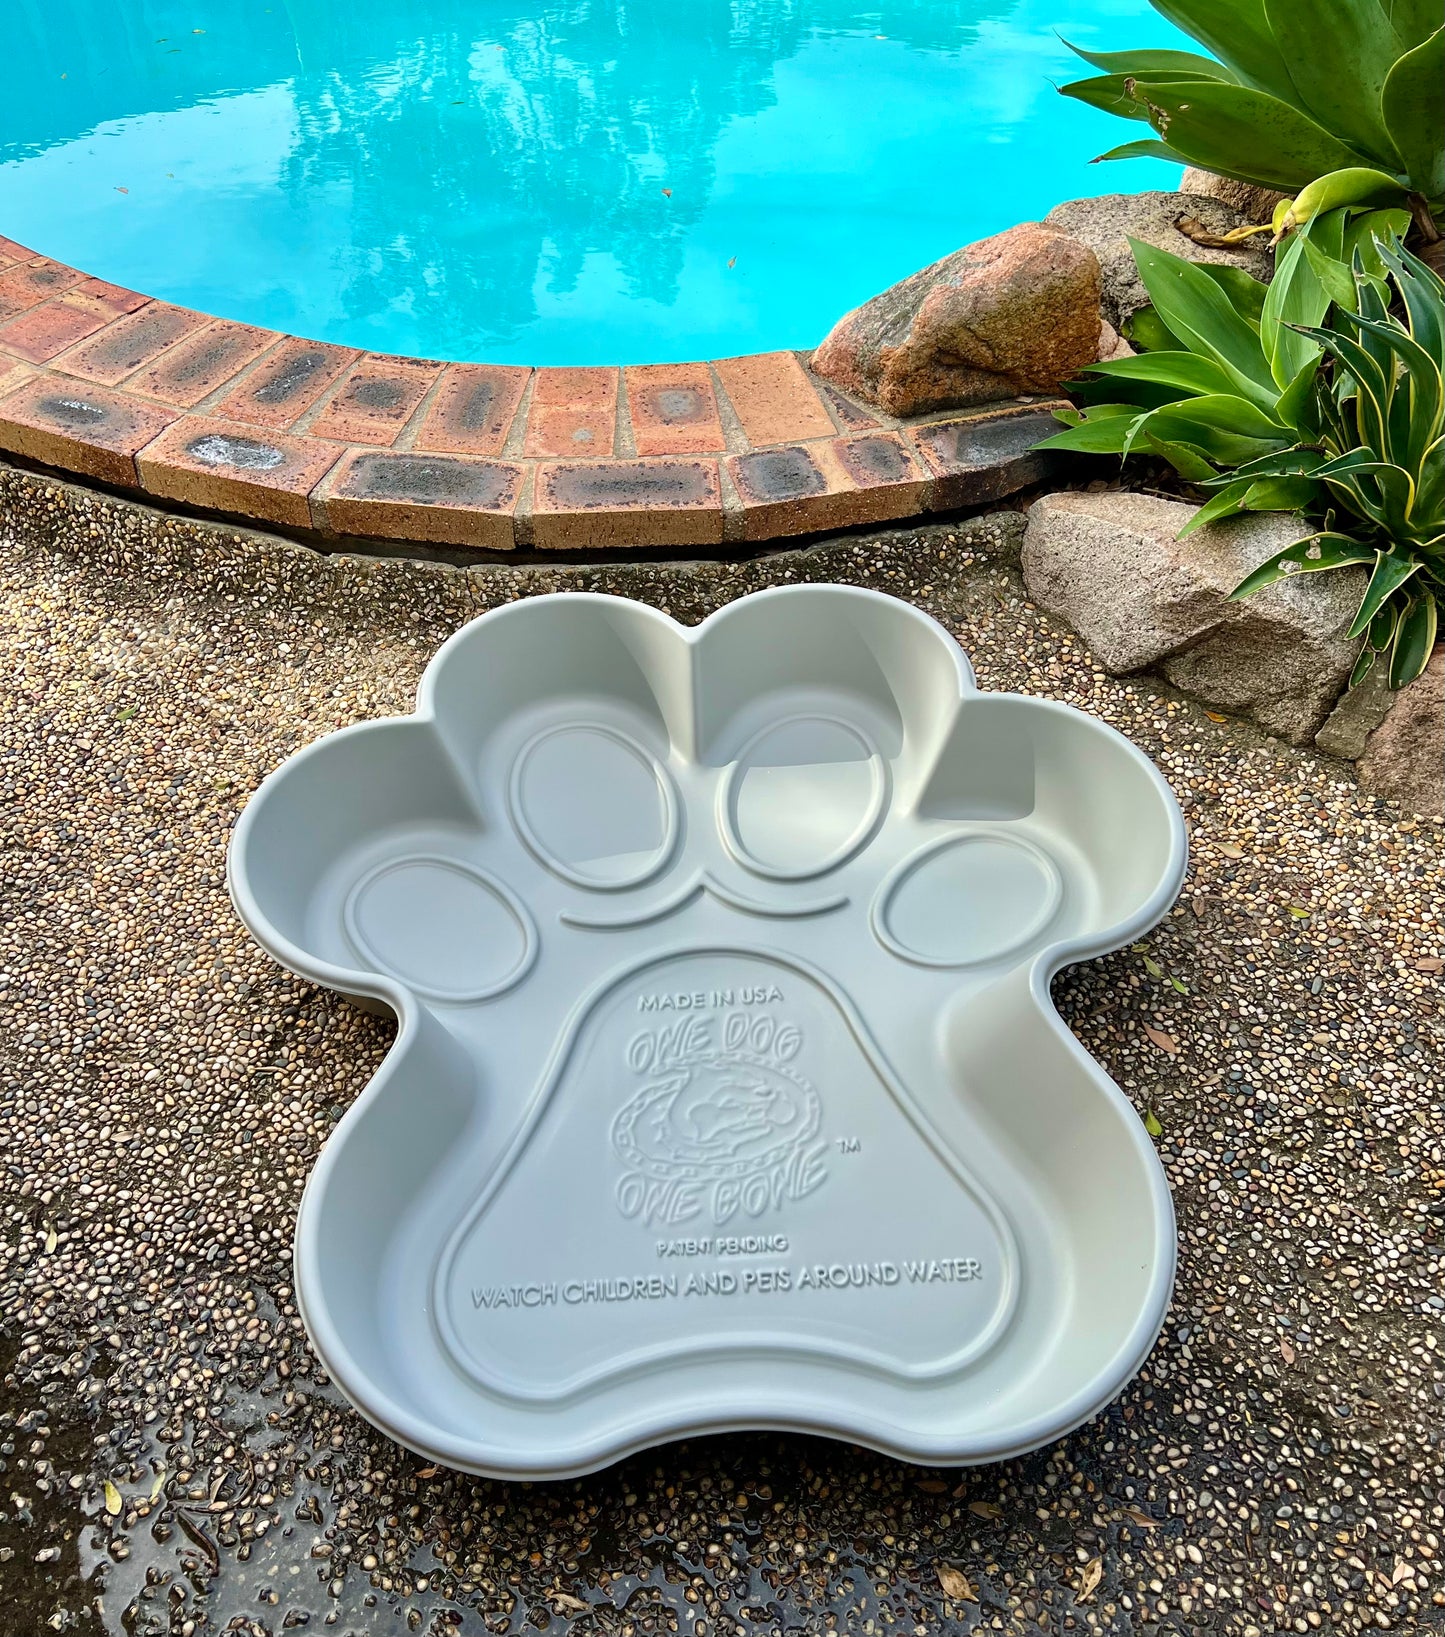 PAW Shaped Dog Pool. Brand: One Dog One Bone